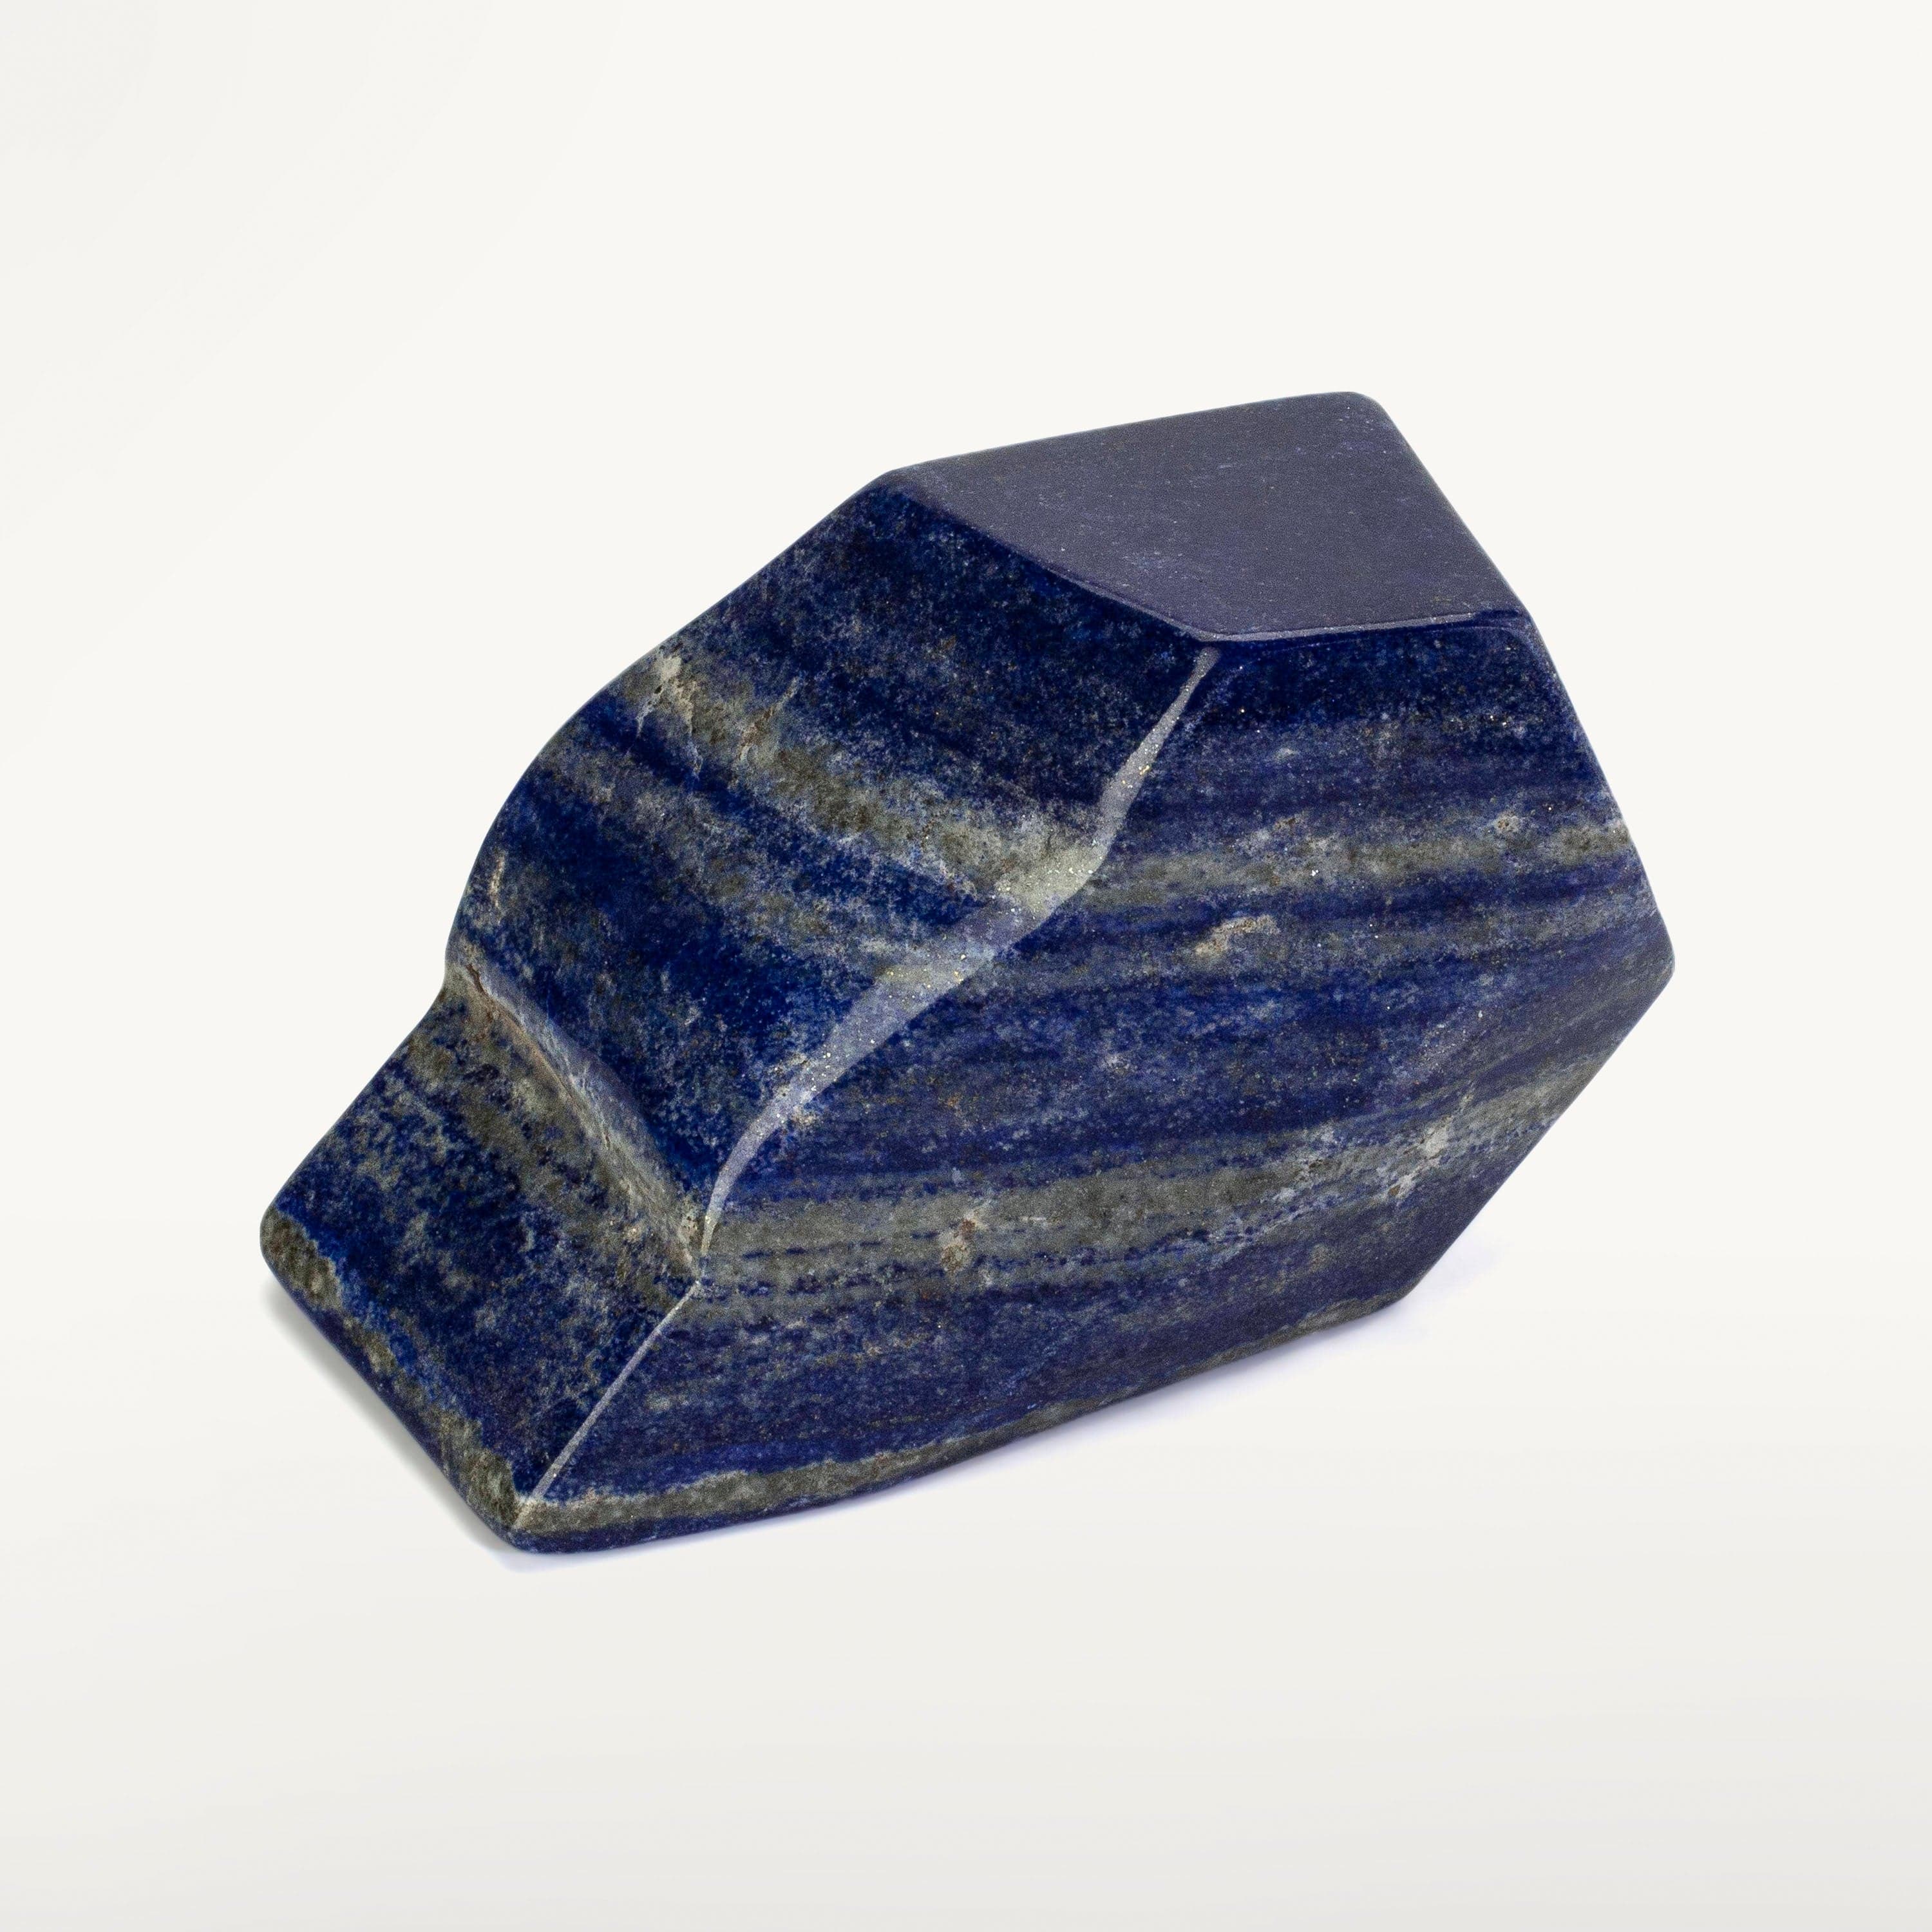 Kalifano Lapis Lapis Lazuli Freeform 4 in. / 1,010 grams LP1100.001